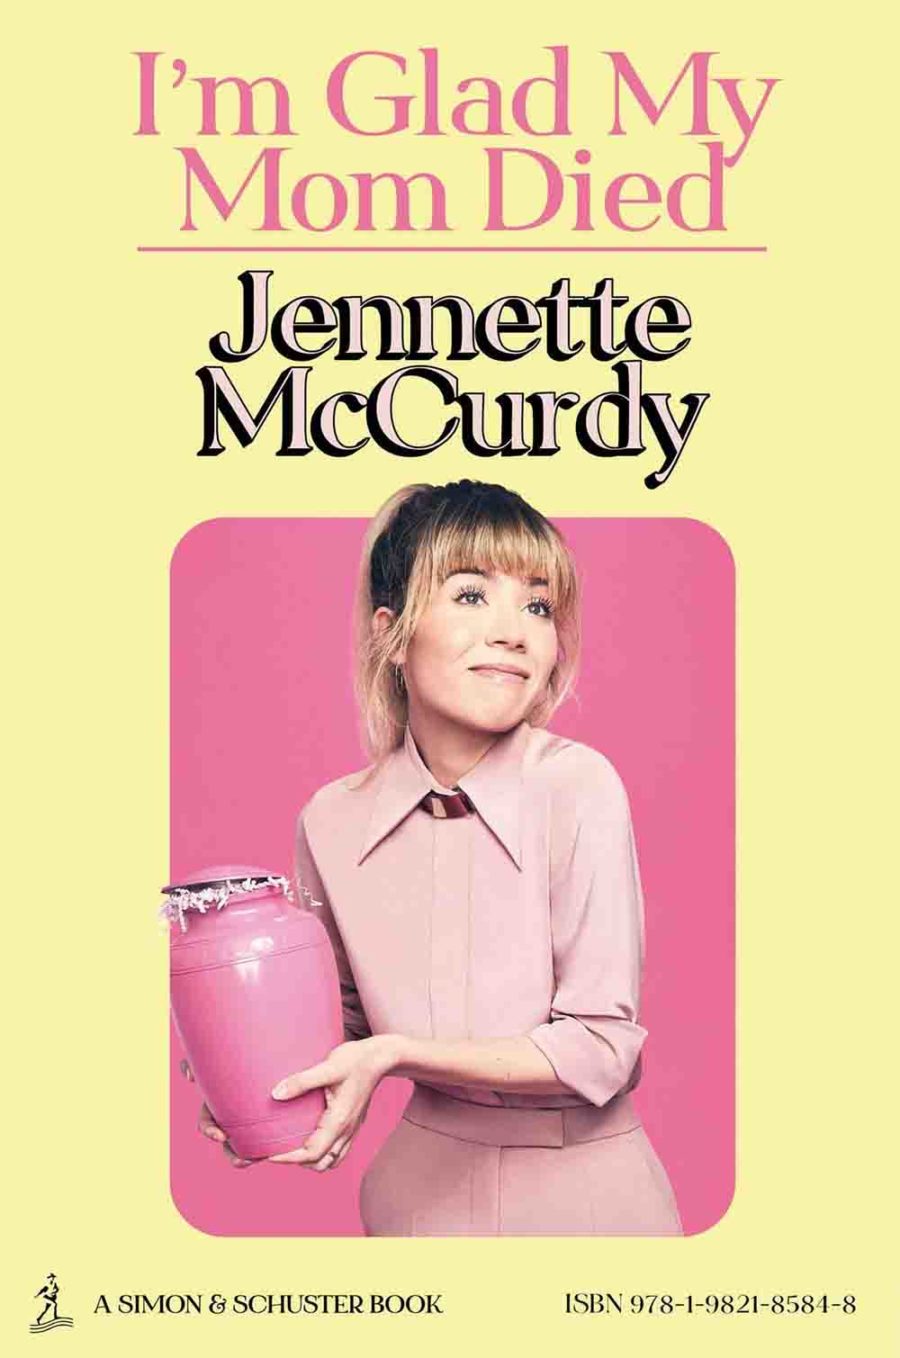 Jennette McCurdy